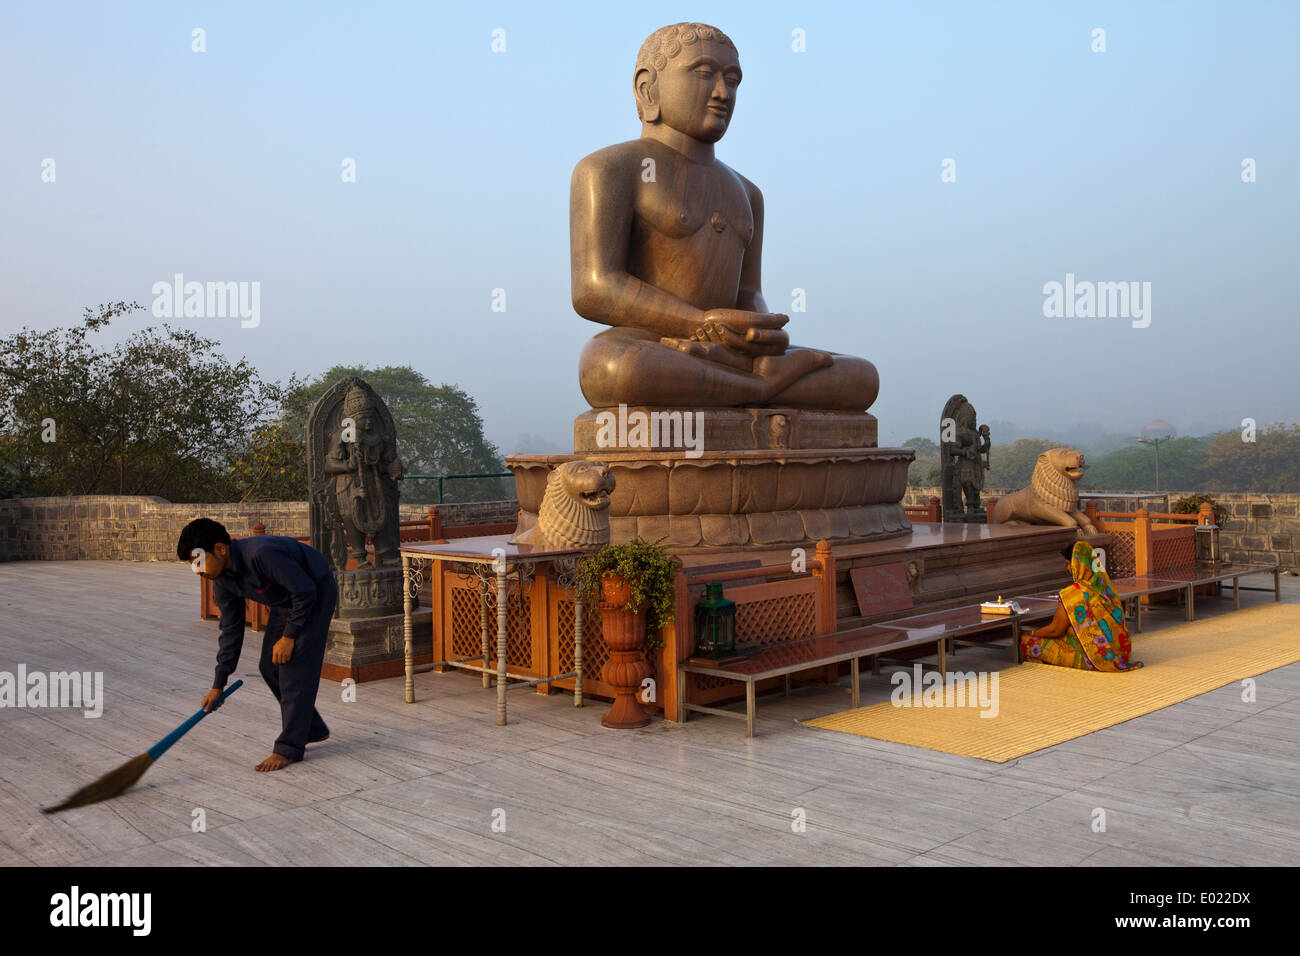 A man sweeps whilst a woman prays at dawn at the statue of Lord Mahavira at the Ahinsa Sthal Jain temple, Delhi, India Stock Photo